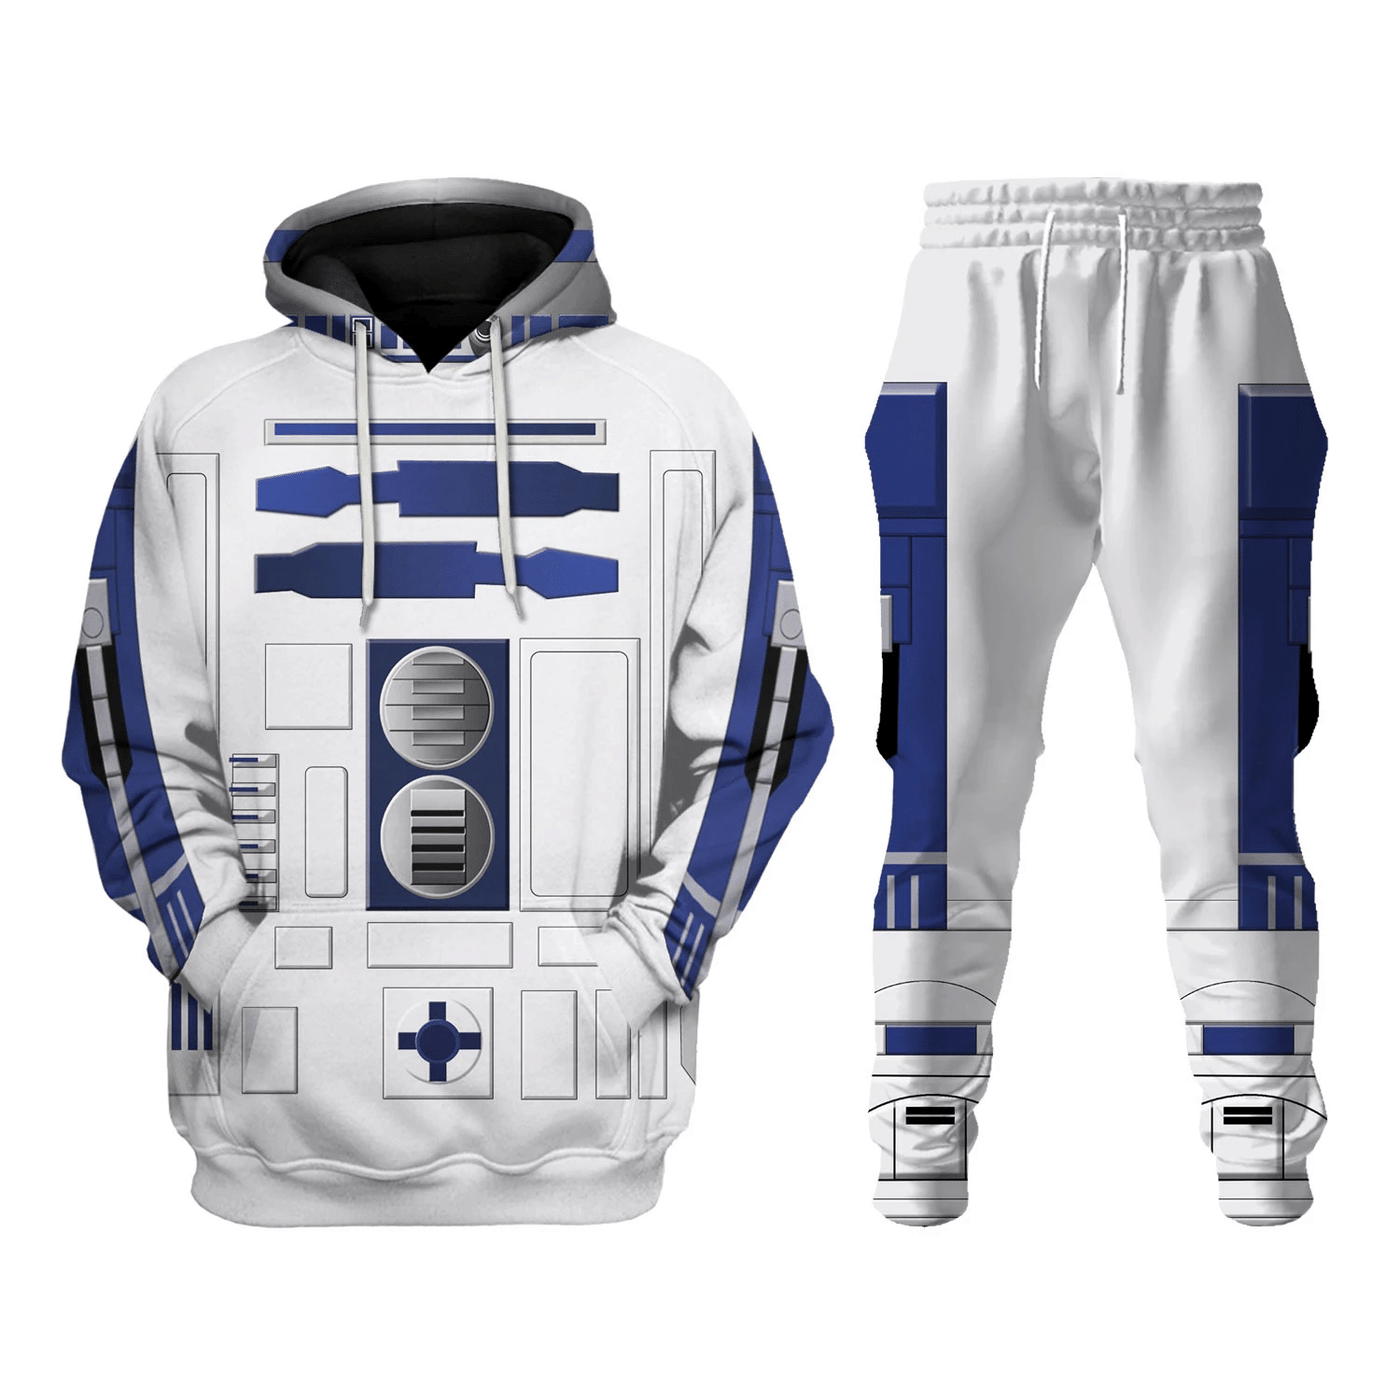 Star Wars R2 D2 Robot Costume - Hoodie + Sweatpant